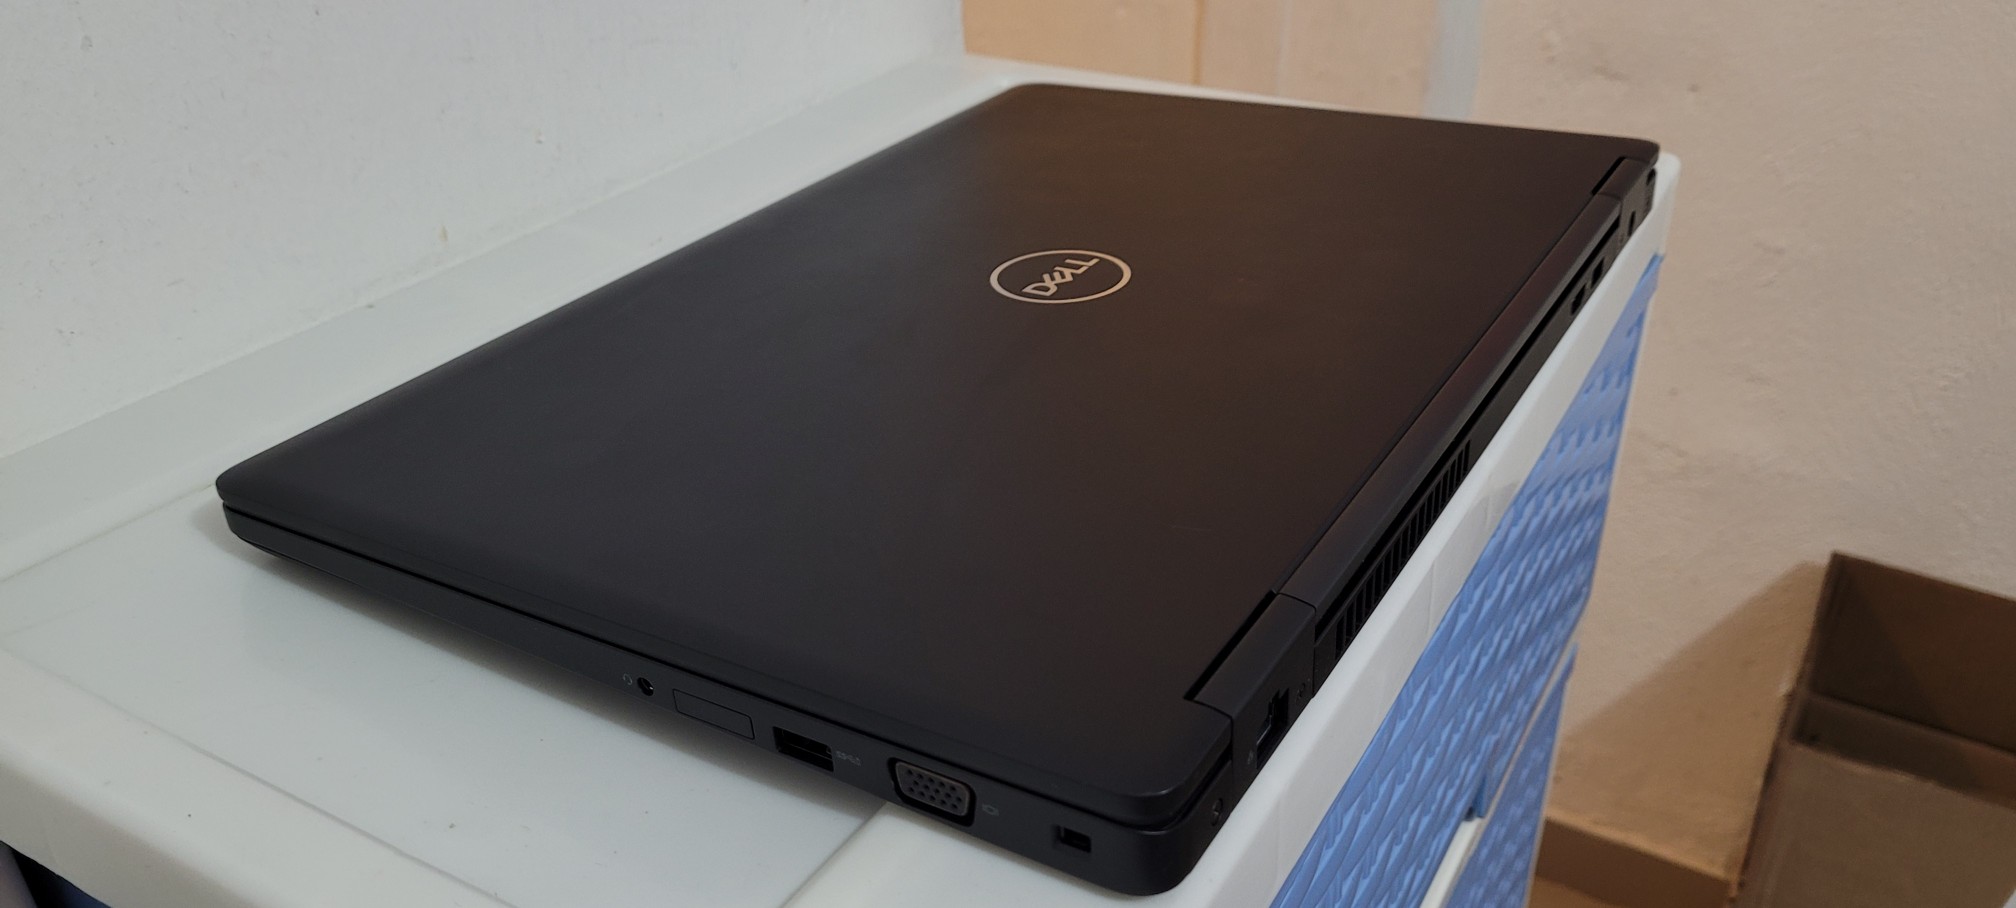 computadoras y laptops - Dell Slim 7470 14 Pulg Core i5 7ma Gen Ram 8gb ddr4 Disco duro 128gb Solido 2